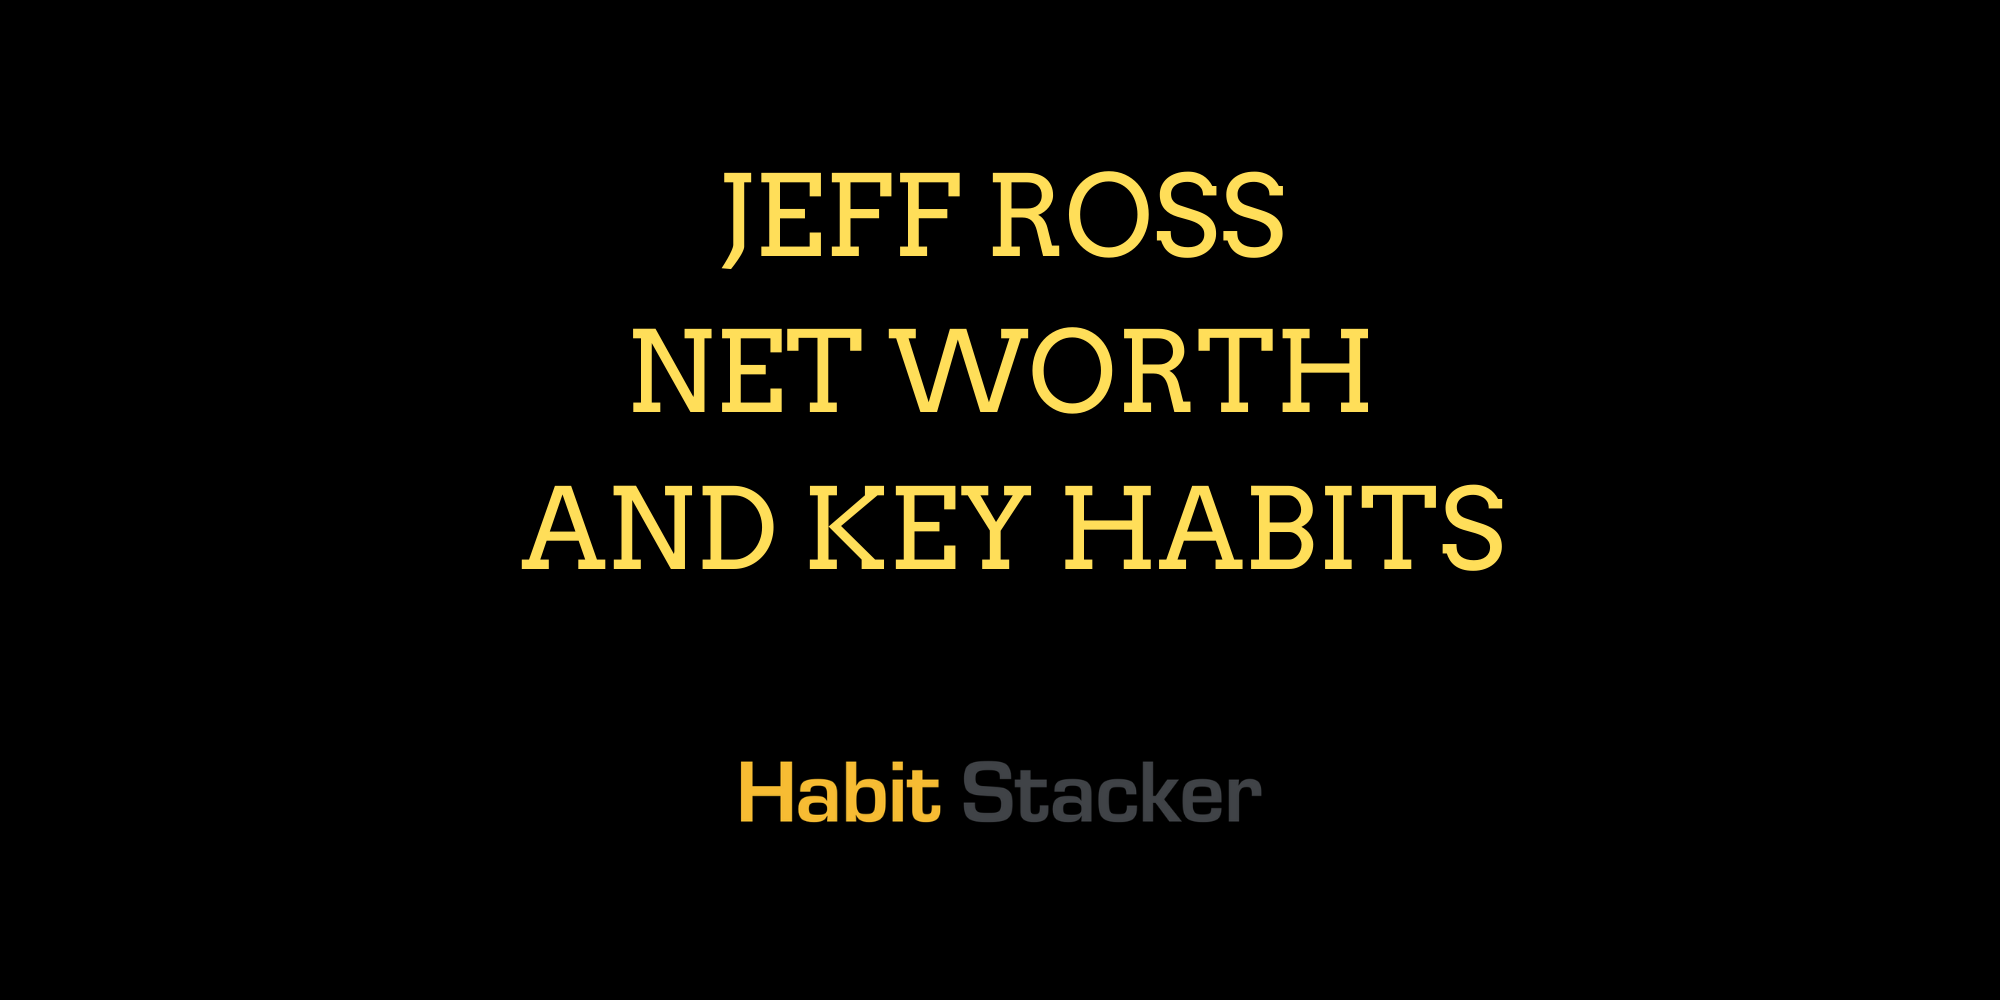 Jeff Ross Net Worth and Key Habits